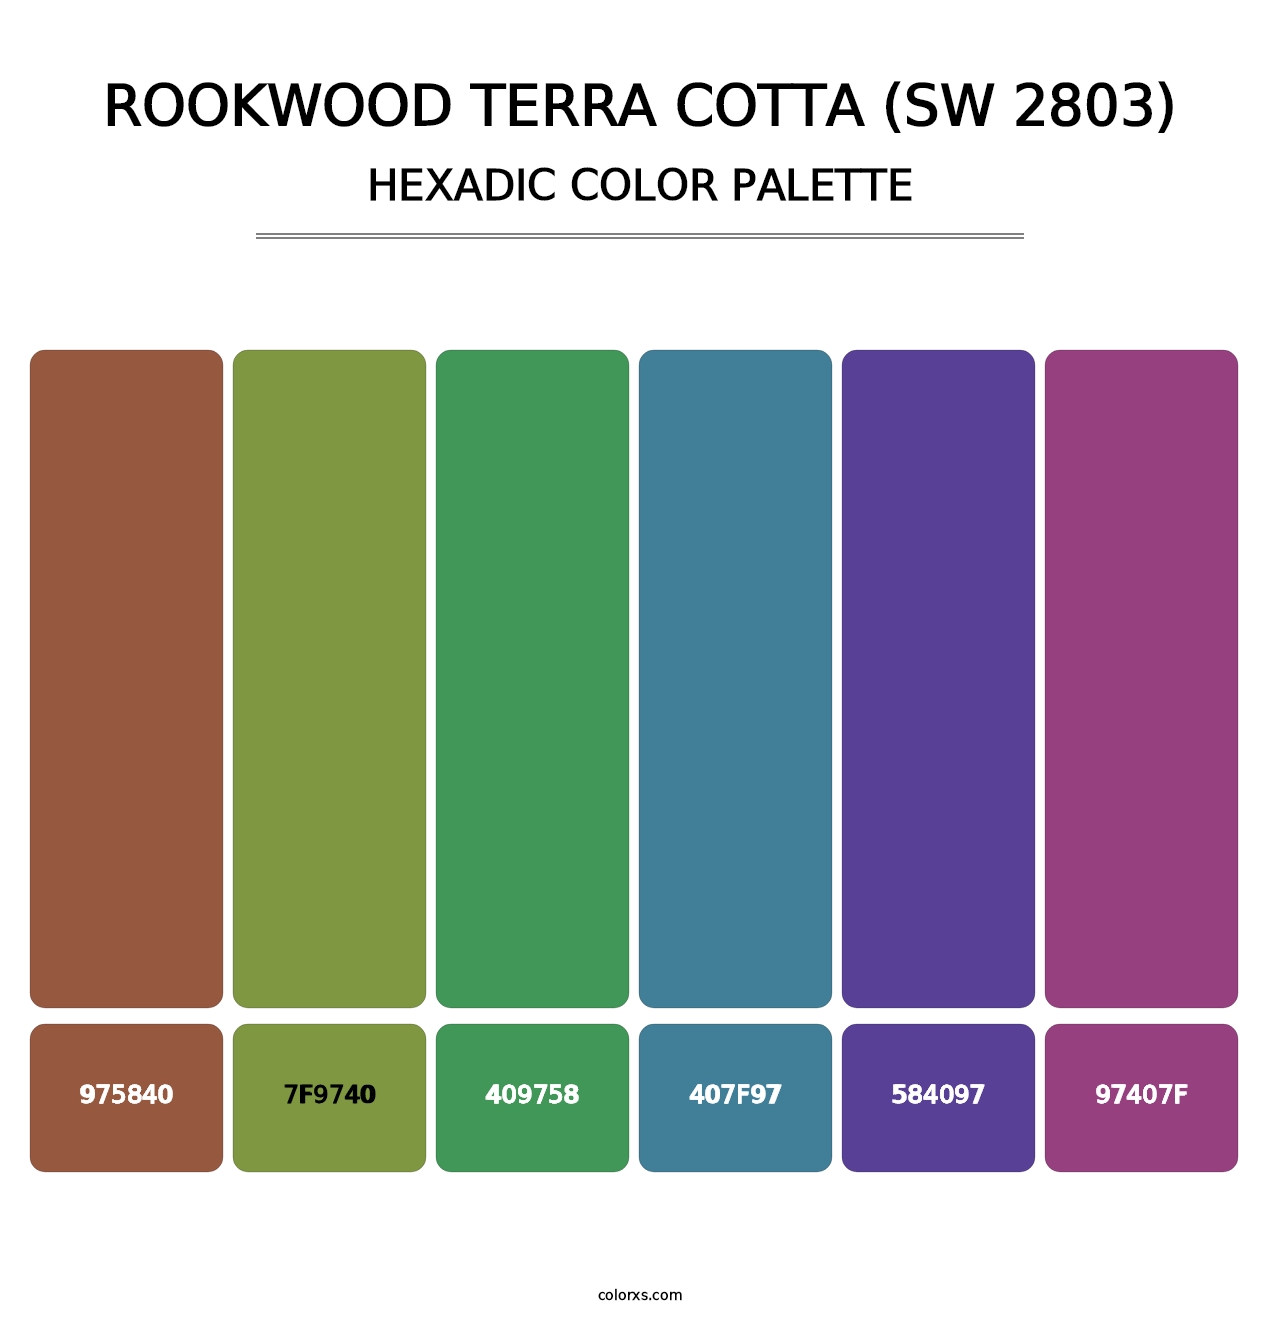 Rookwood Terra Cotta (SW 2803) - Hexadic Color Palette